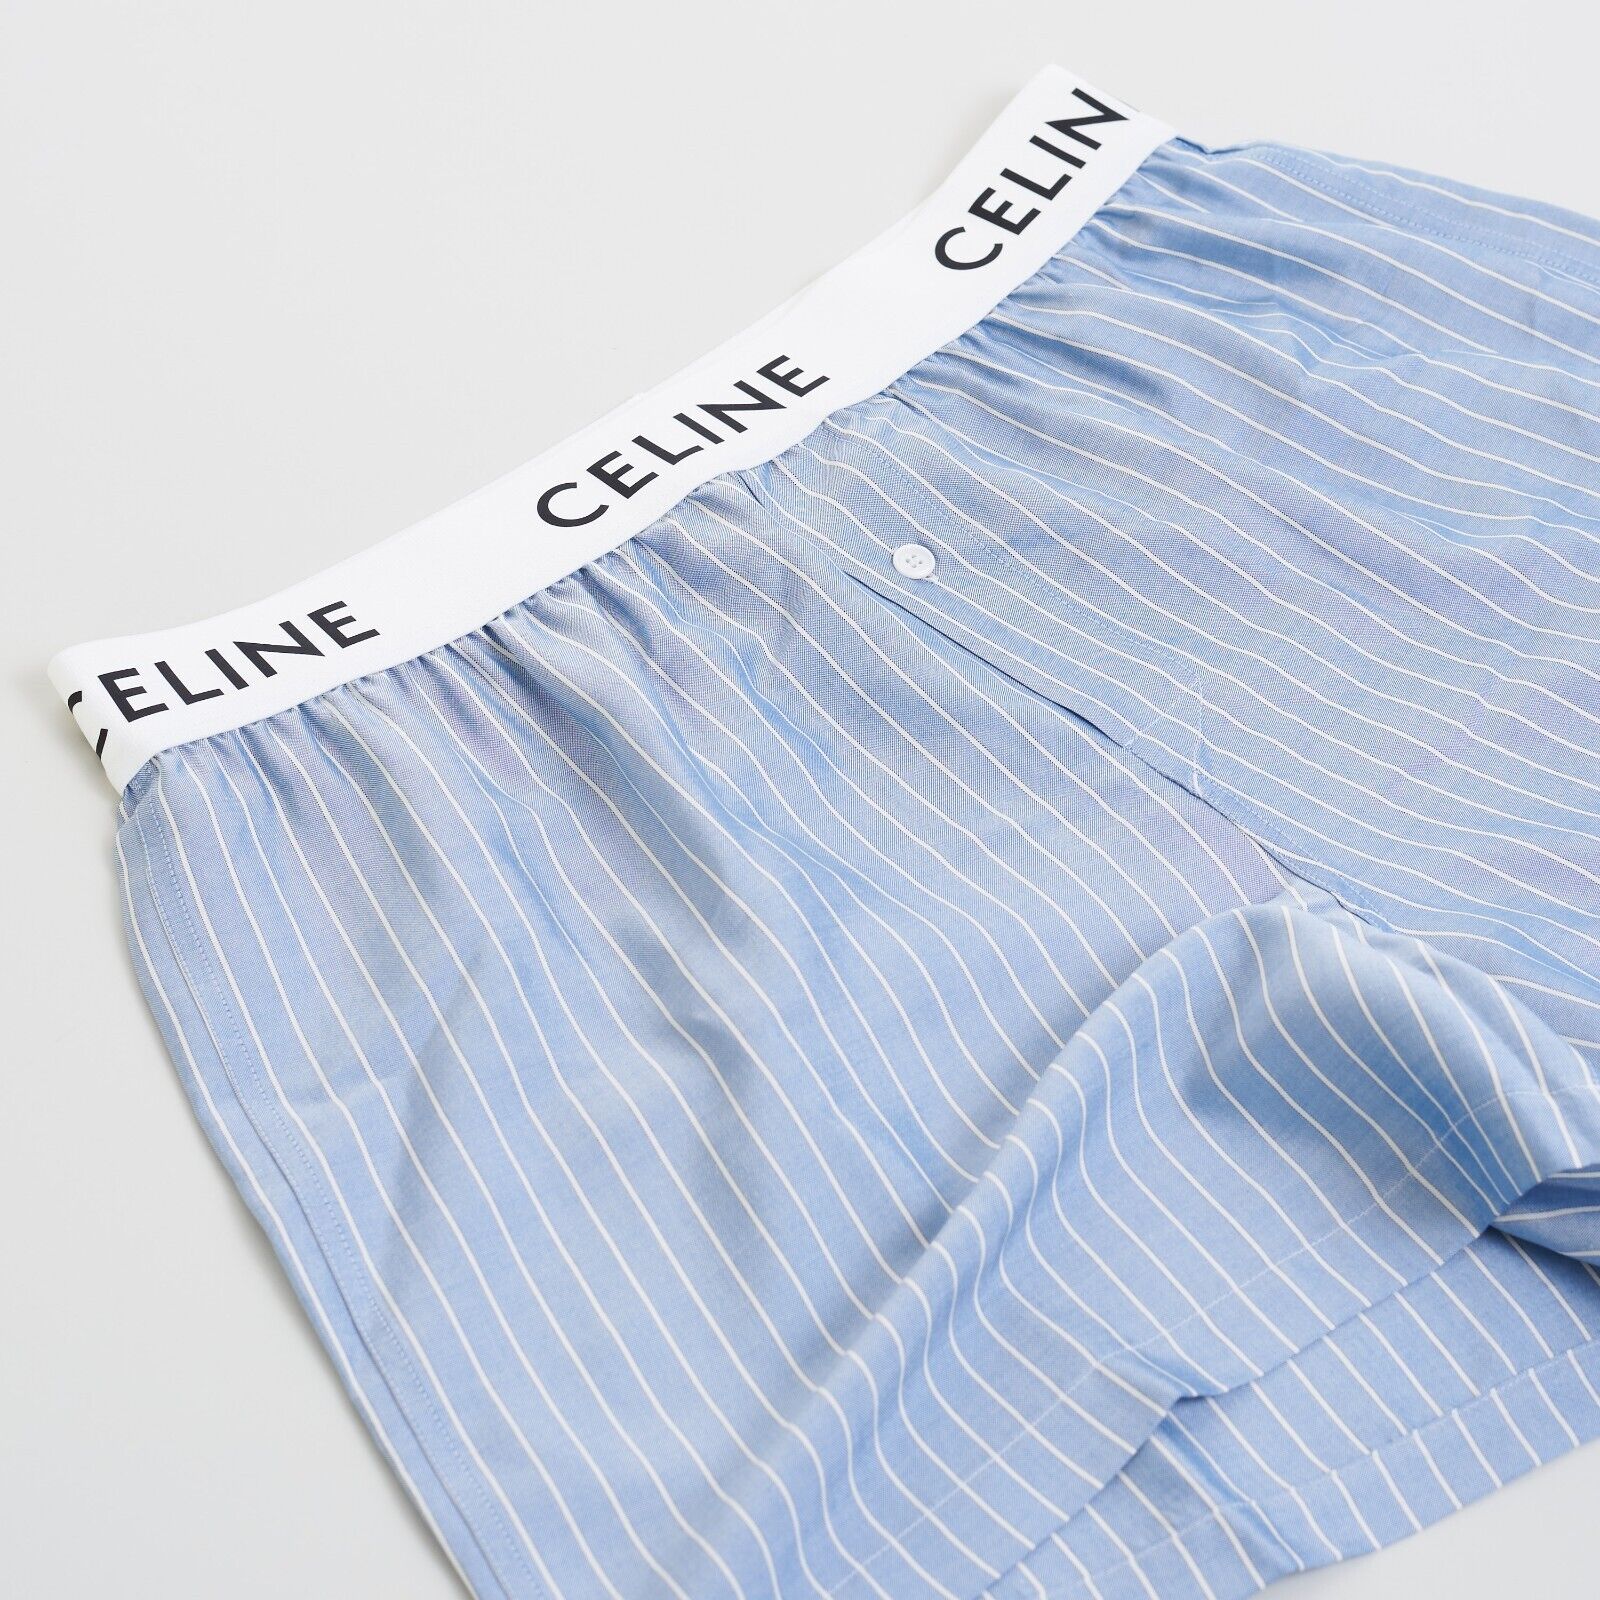 CELINE 340$ Boxer Shorts In Blue & White Striped Silk